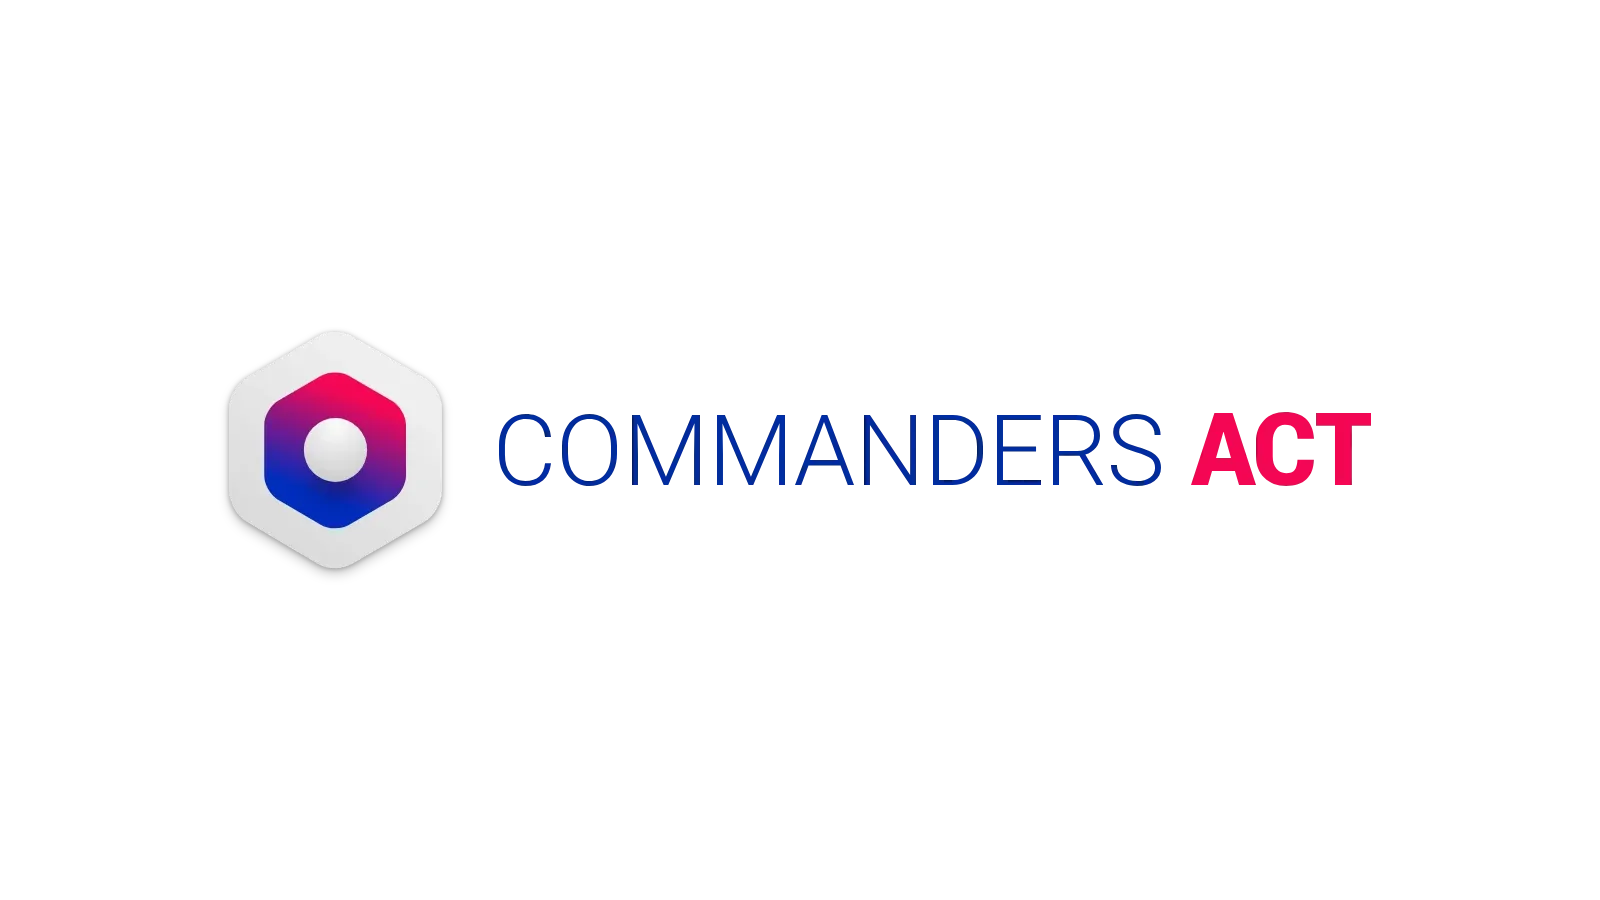 Commanders Act logo